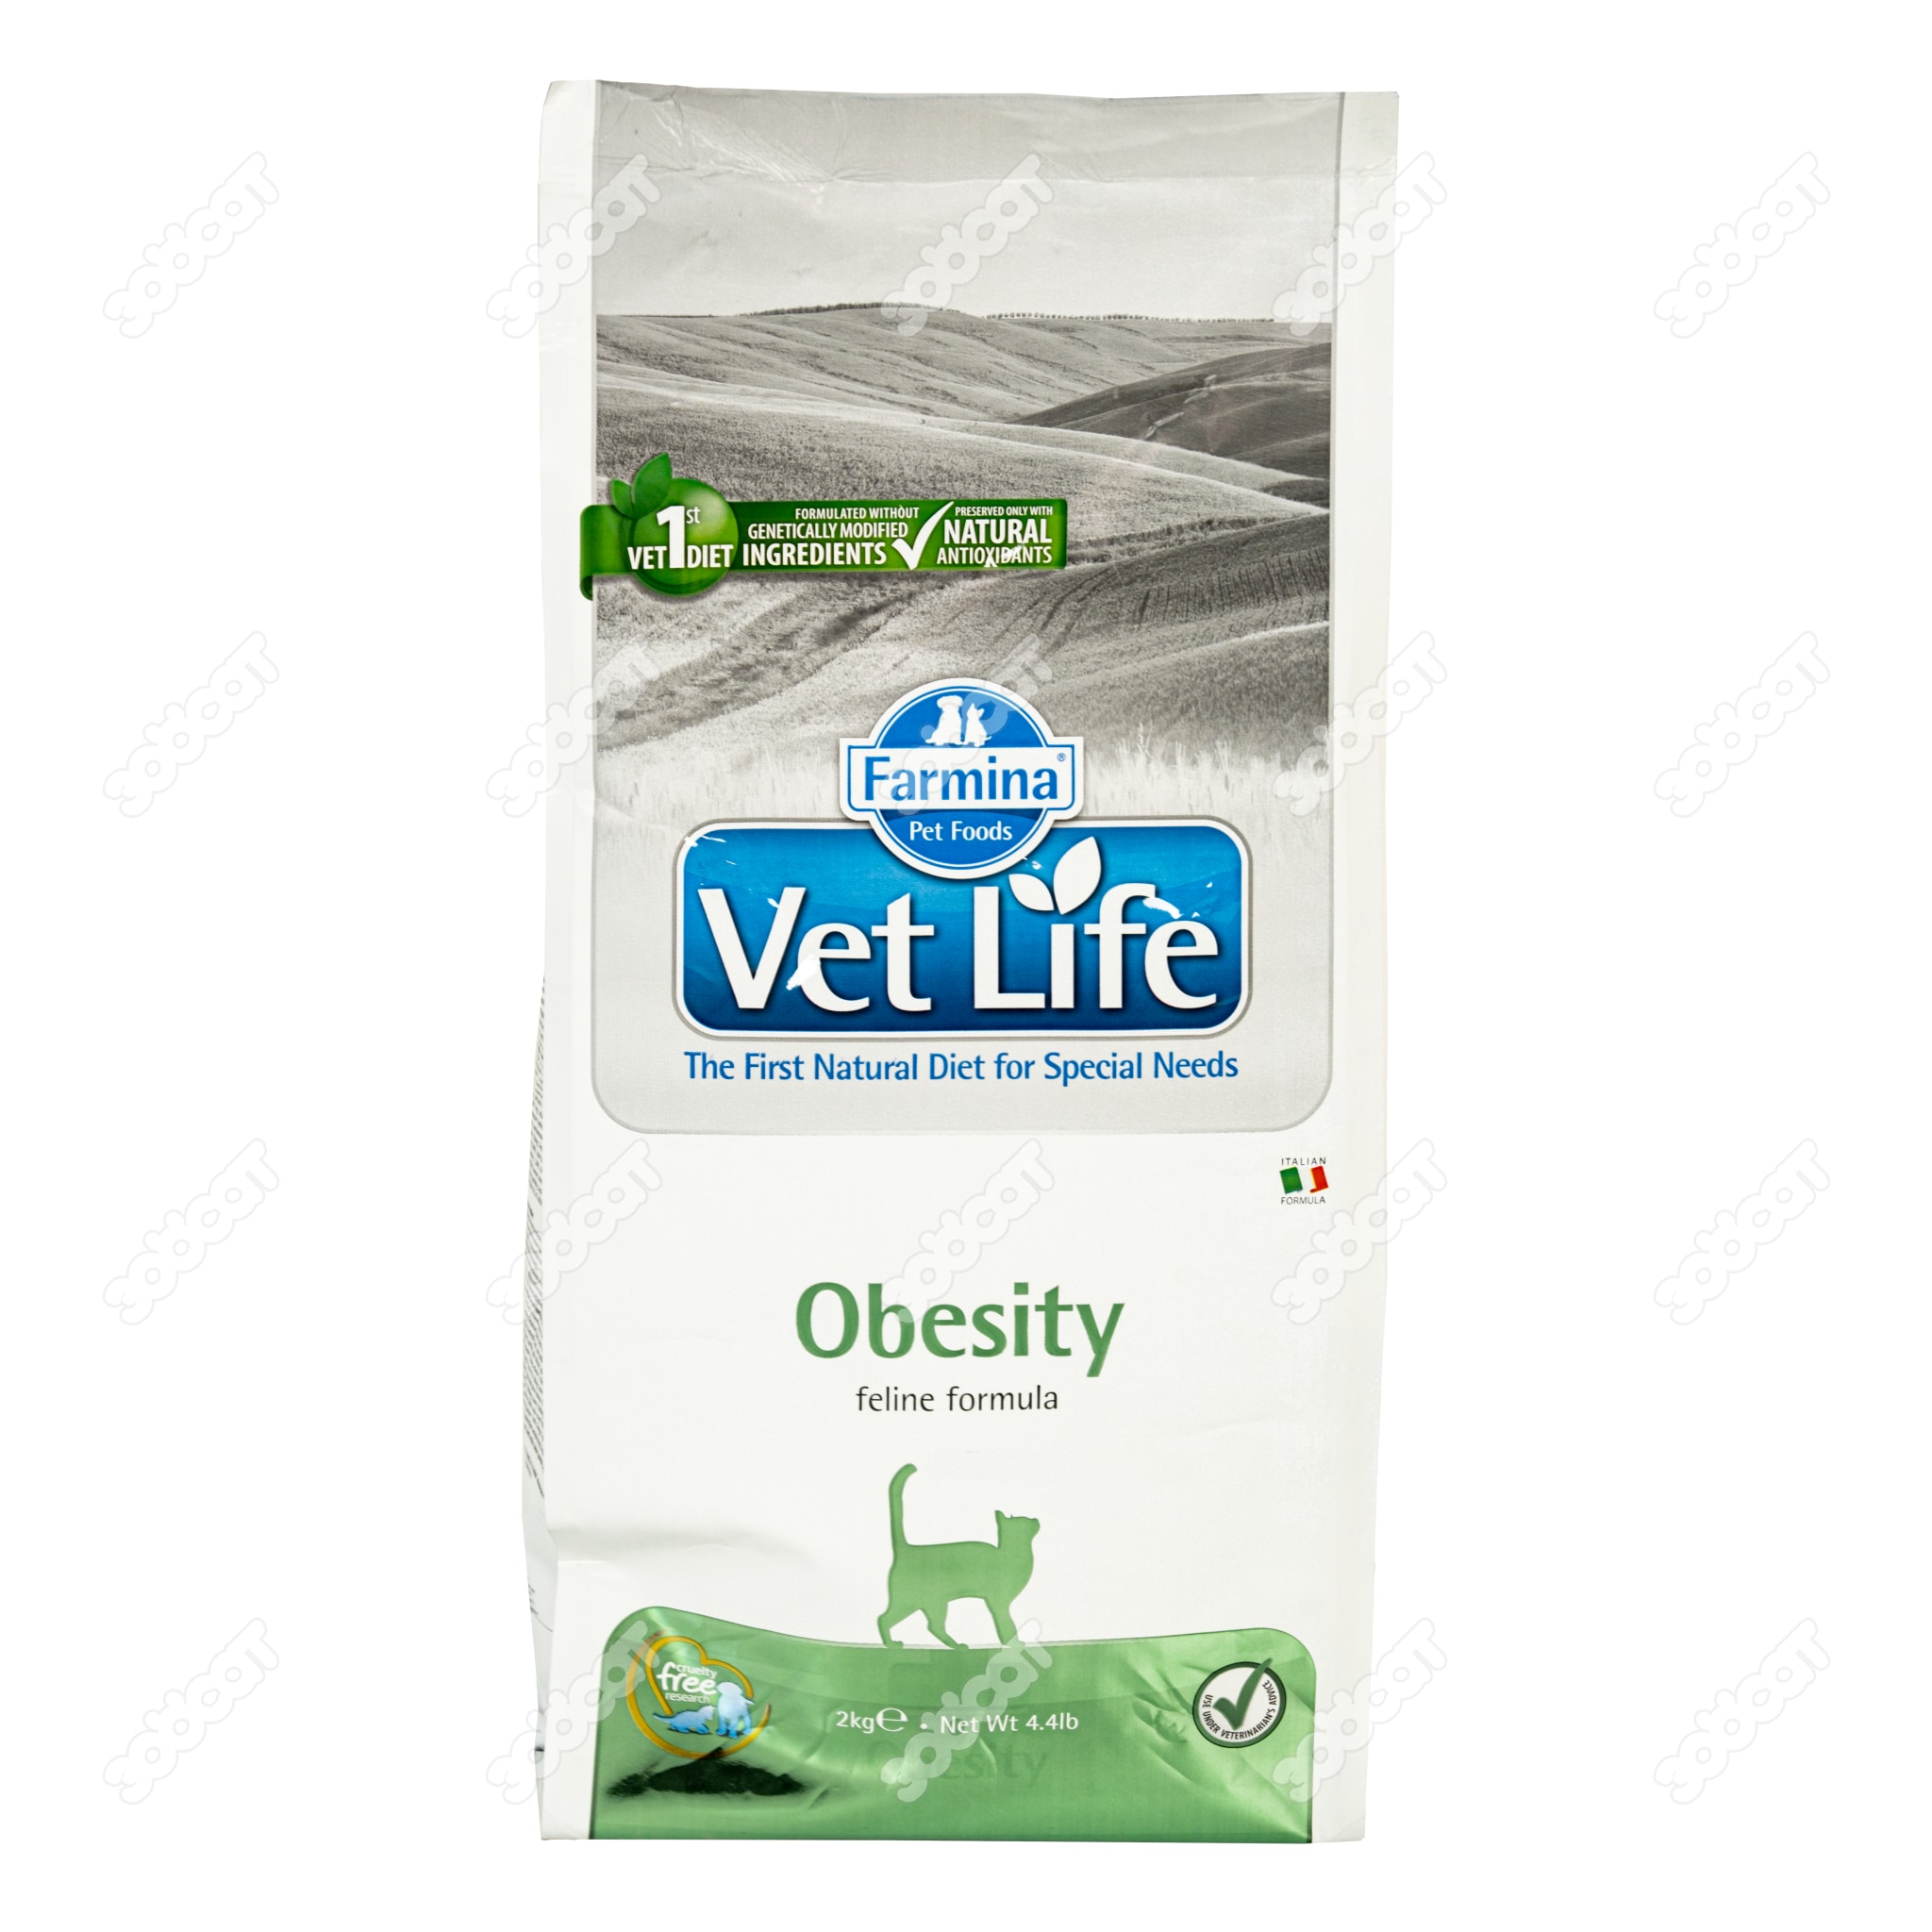 Farmina vet life 12 кг